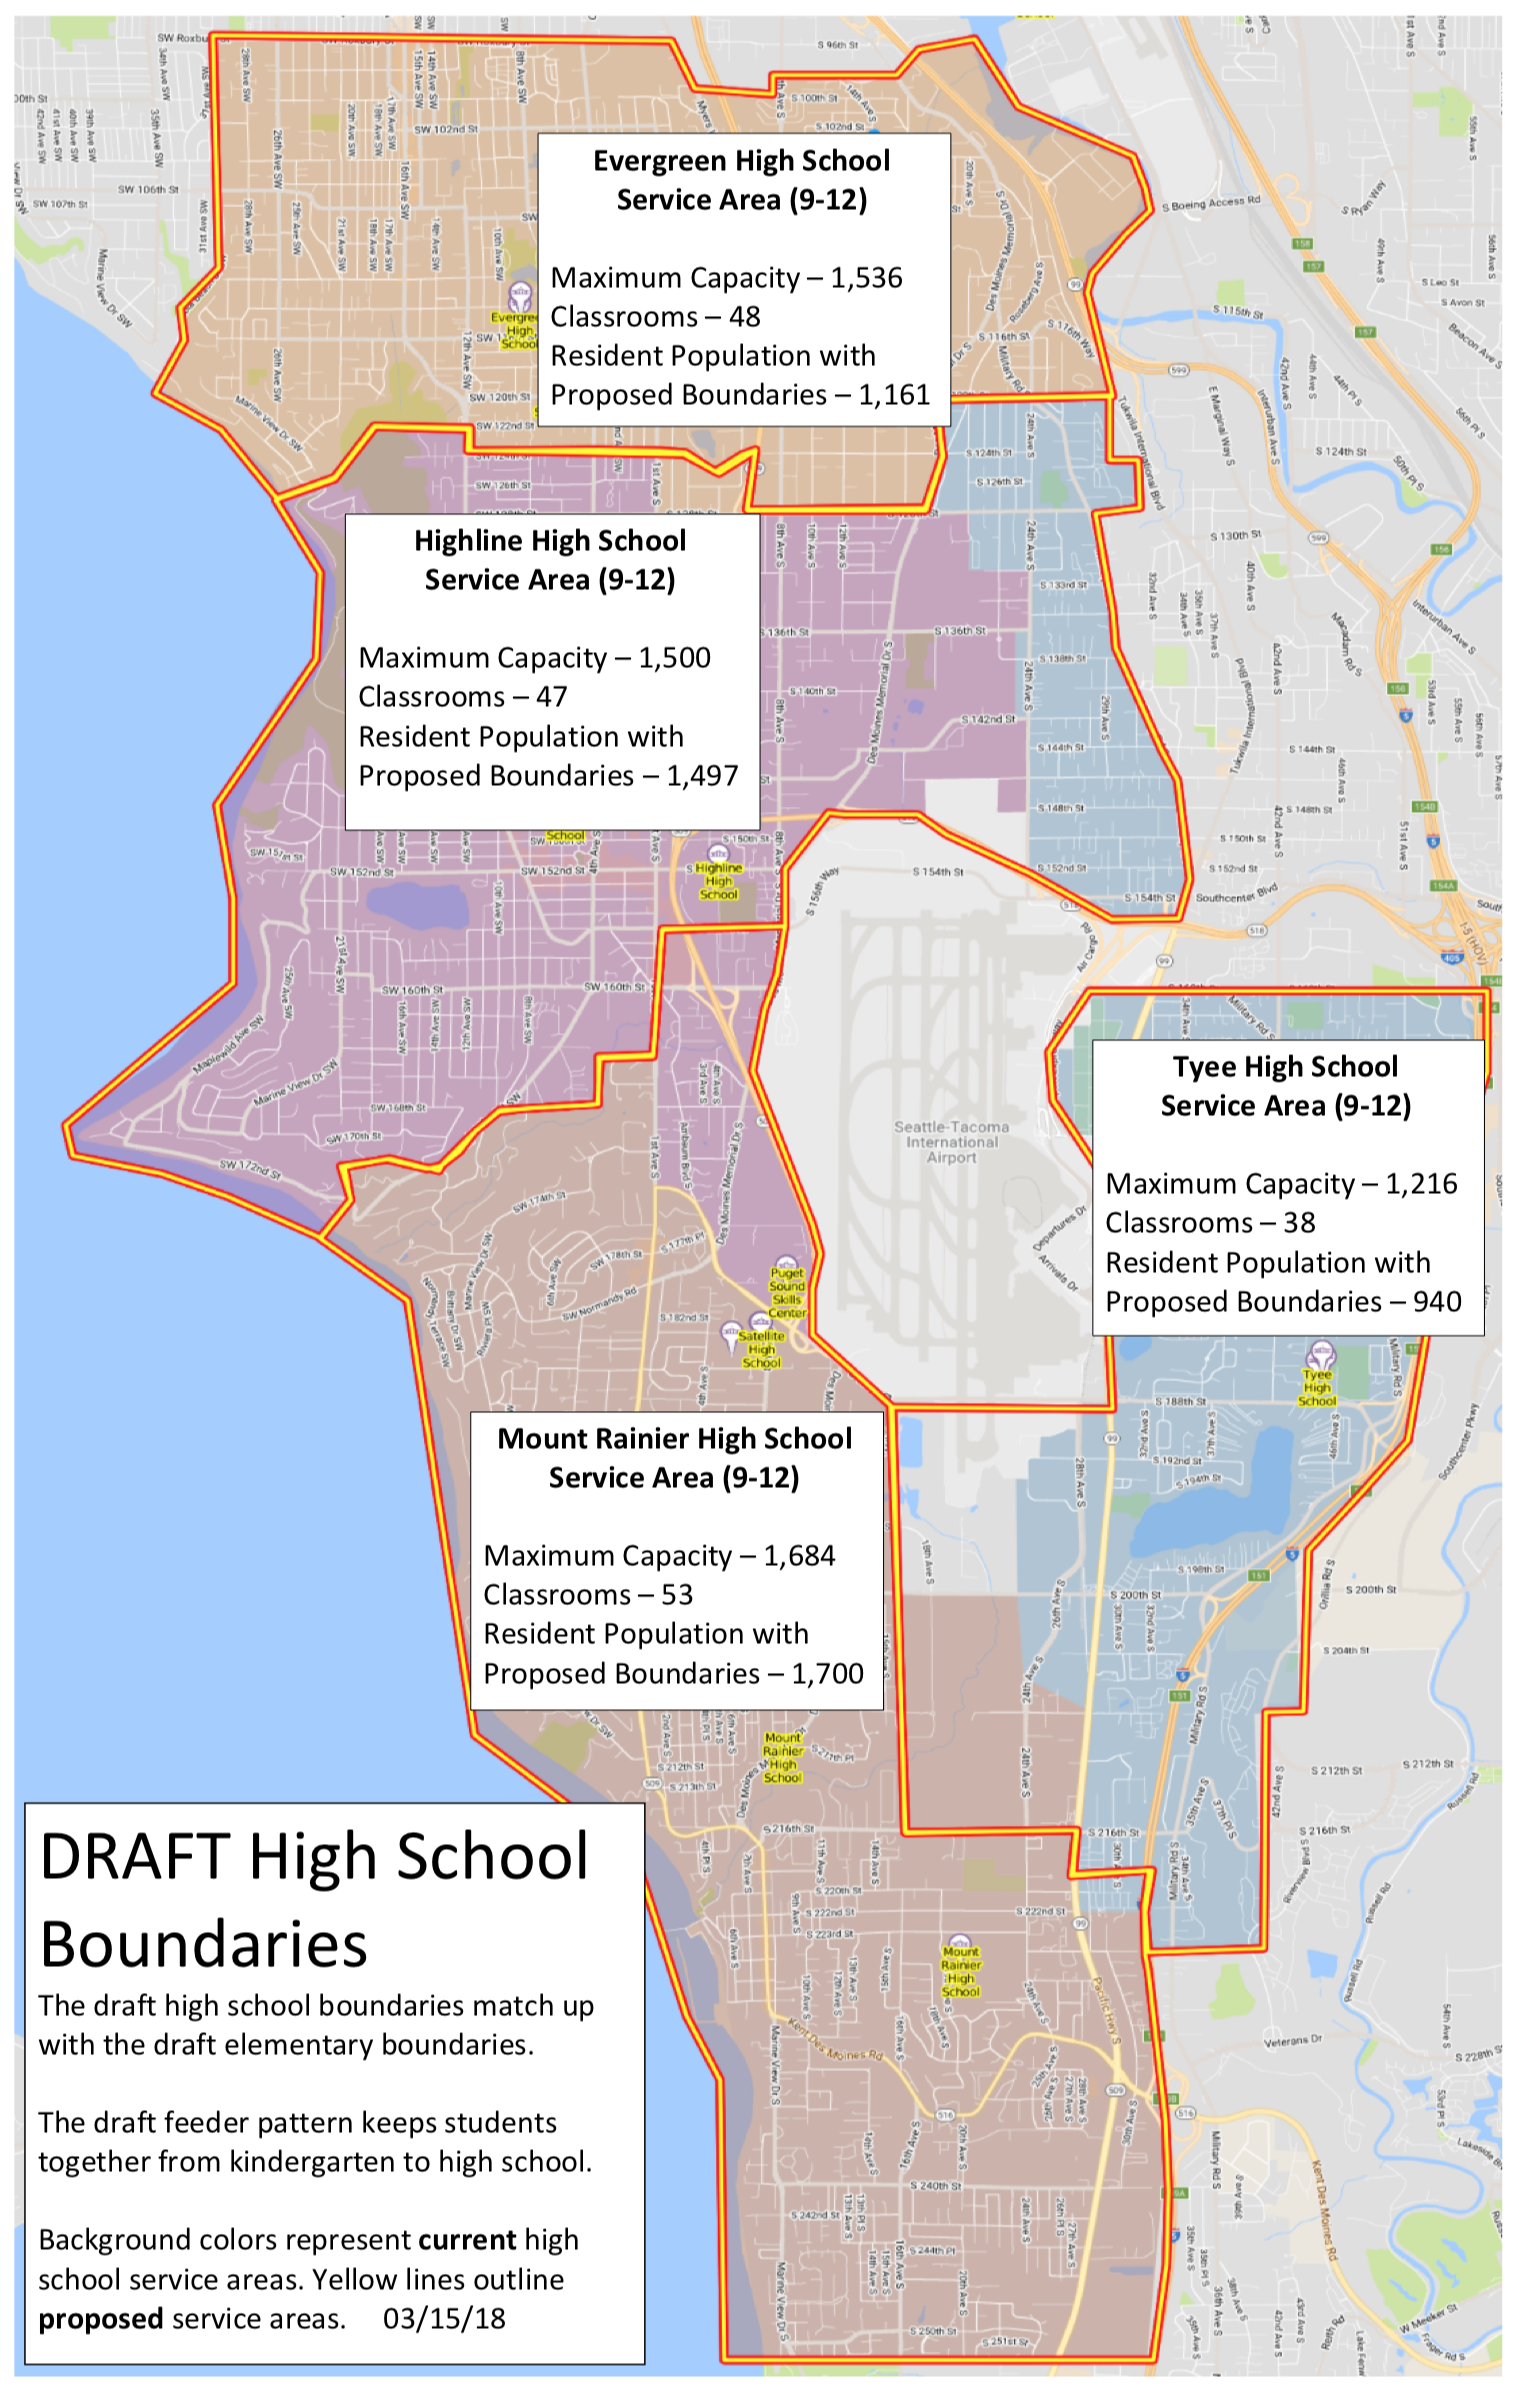 Draft High School Boundaries